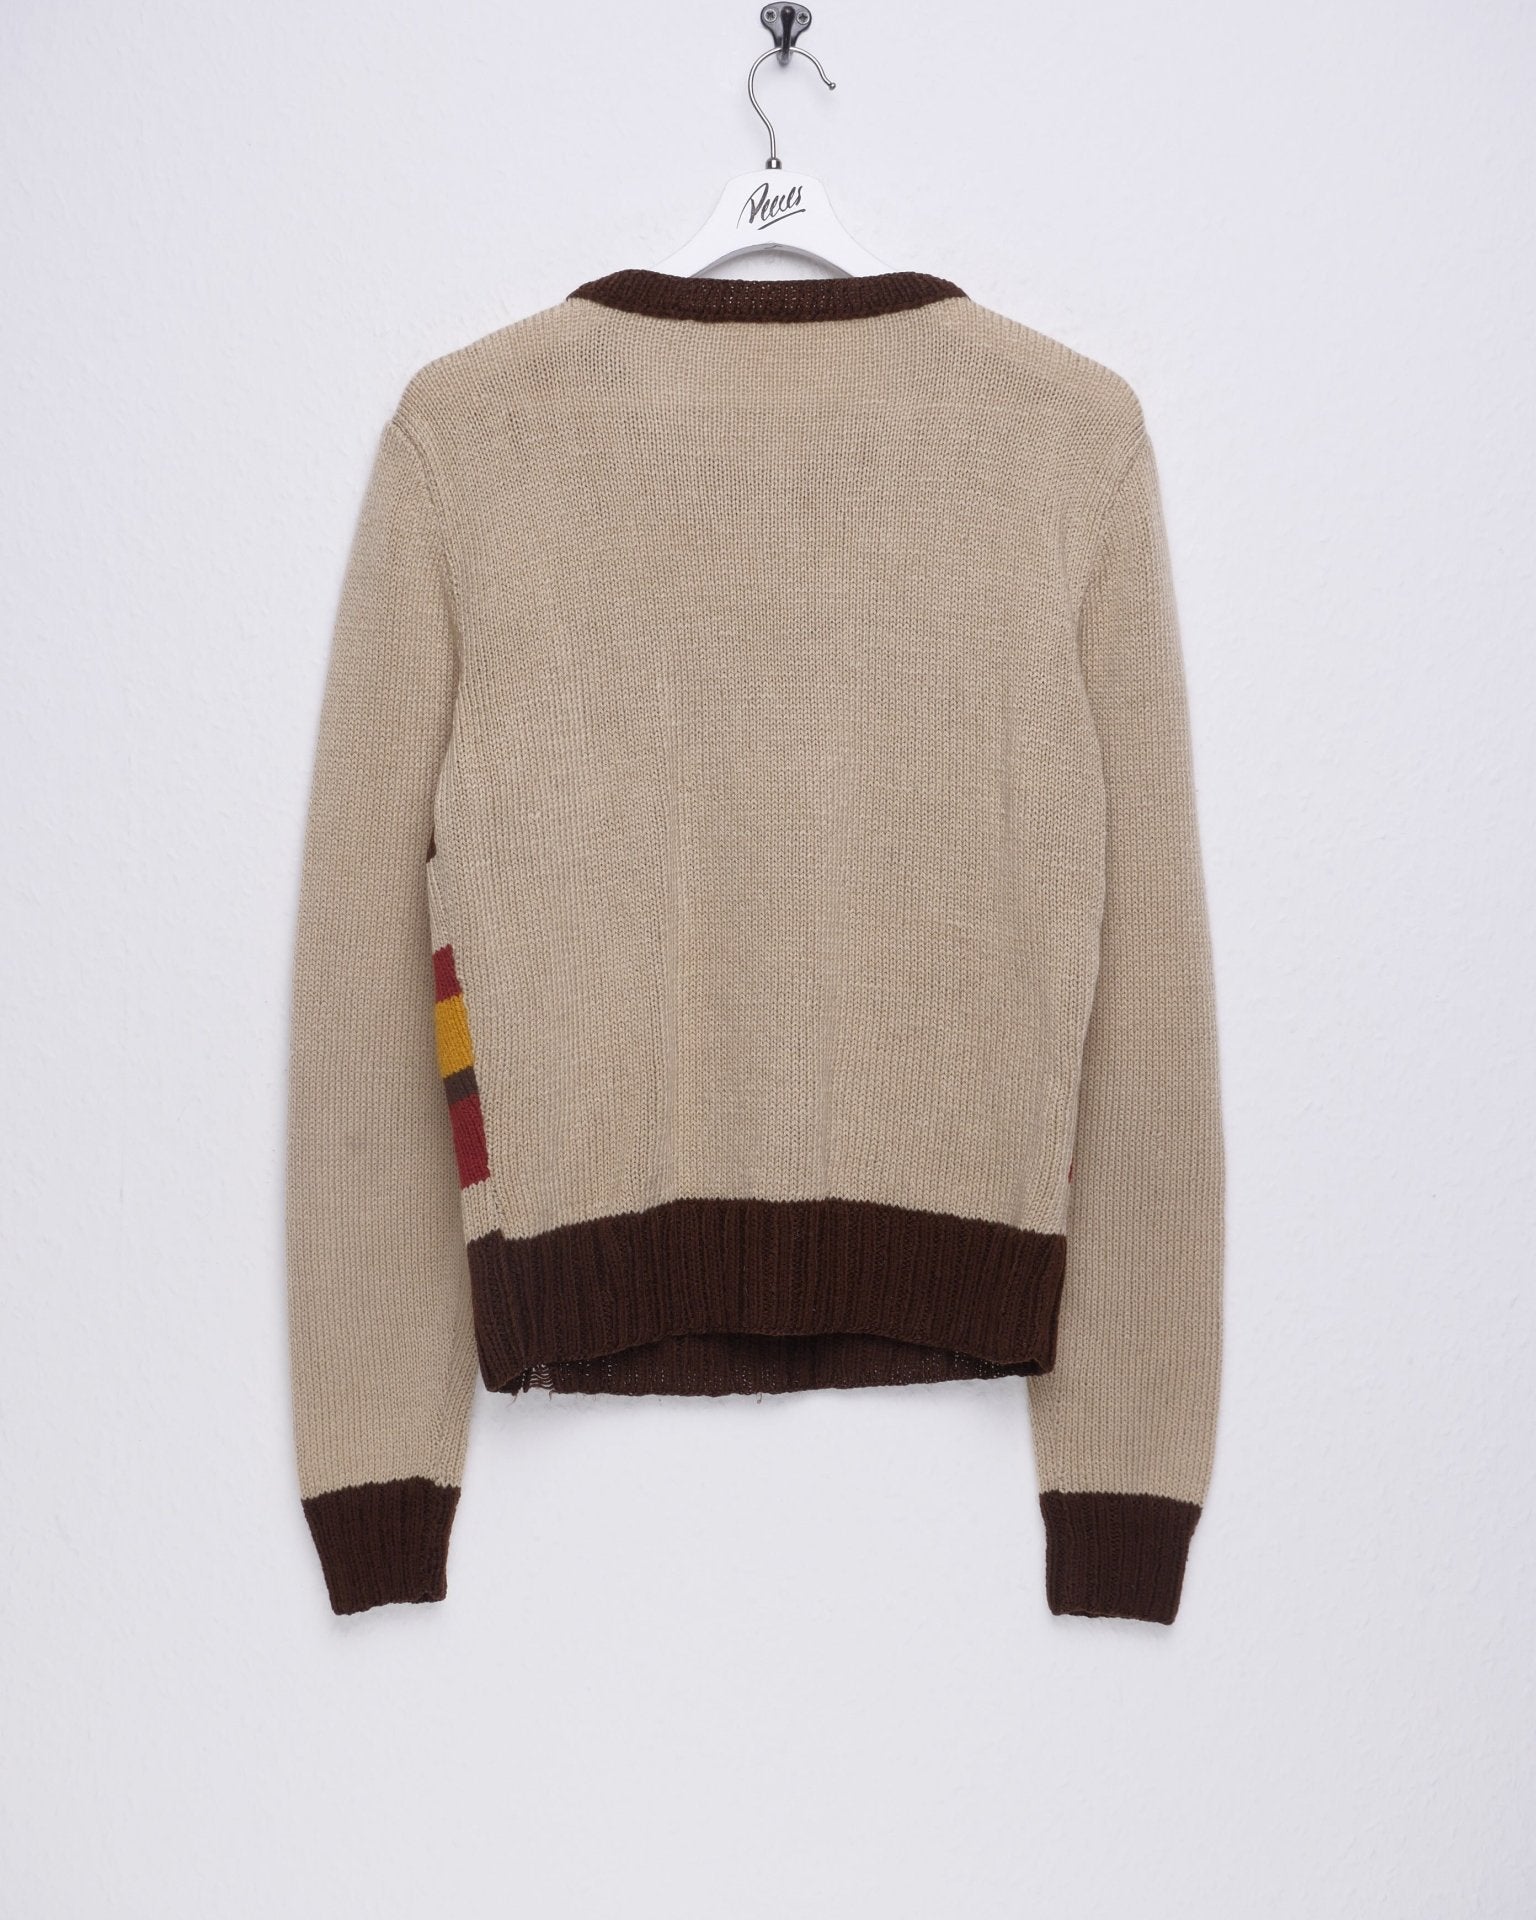 Vintage multicolored knit Sweater - Peeces